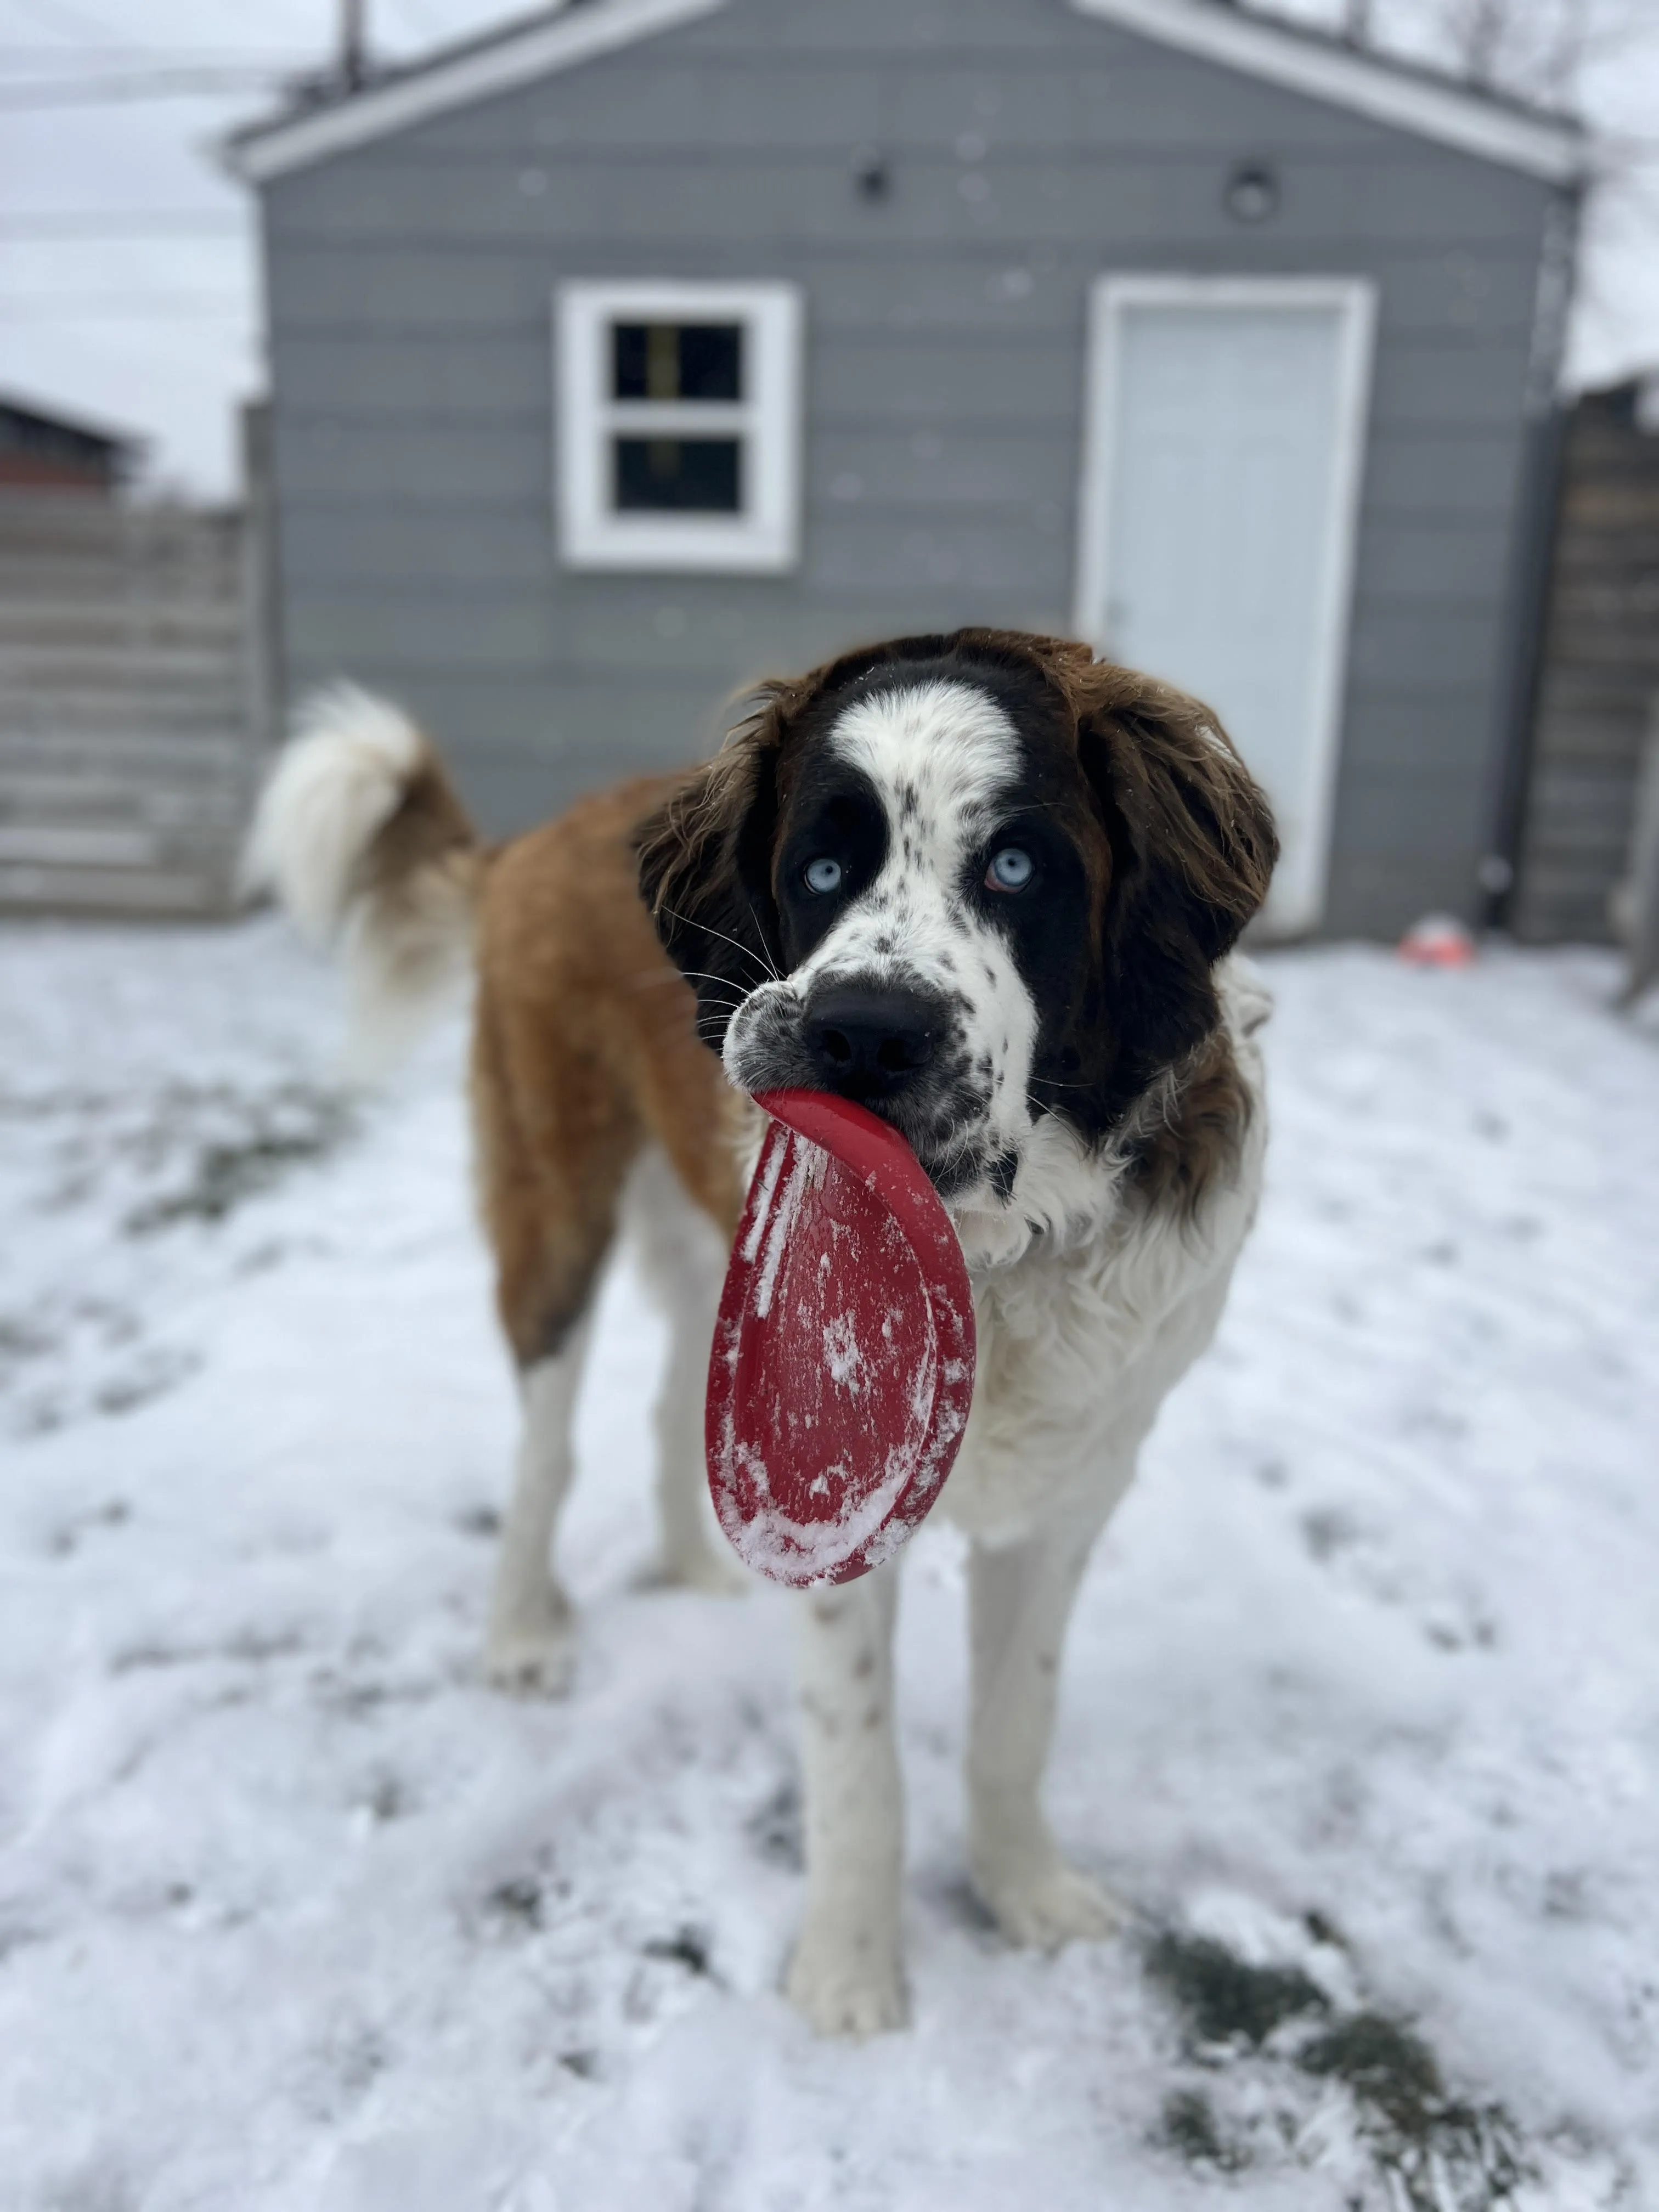 Sankt Bernhardshund med blå ögon leker med en frisbee i snön